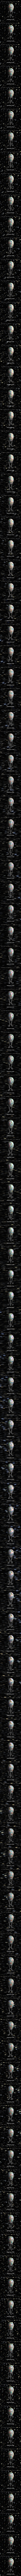 Fabergé Egg: Cosmic